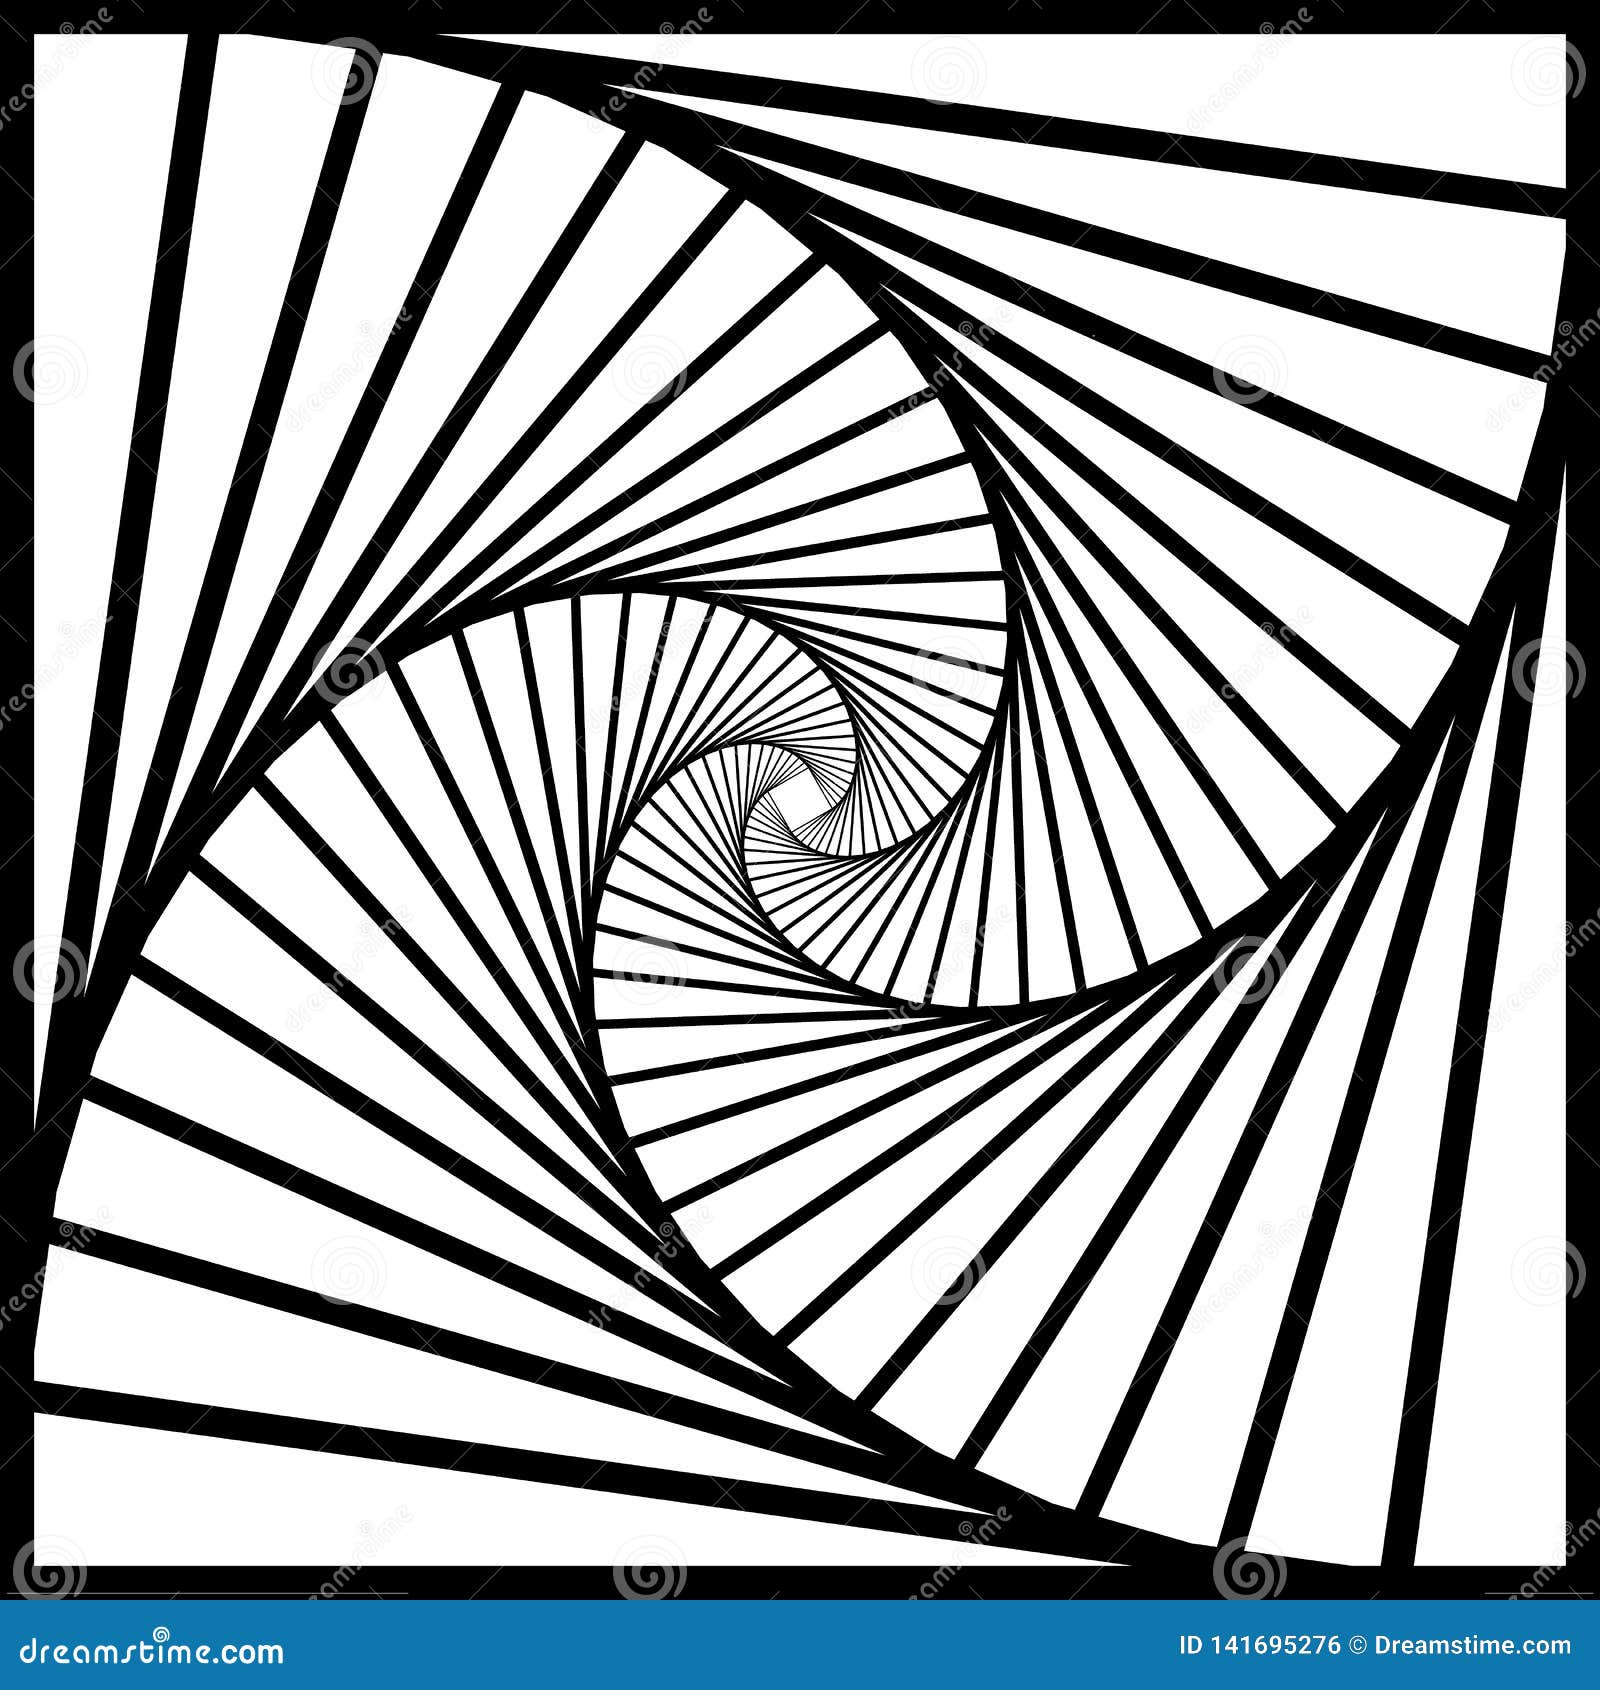 simple optical illusion patterns